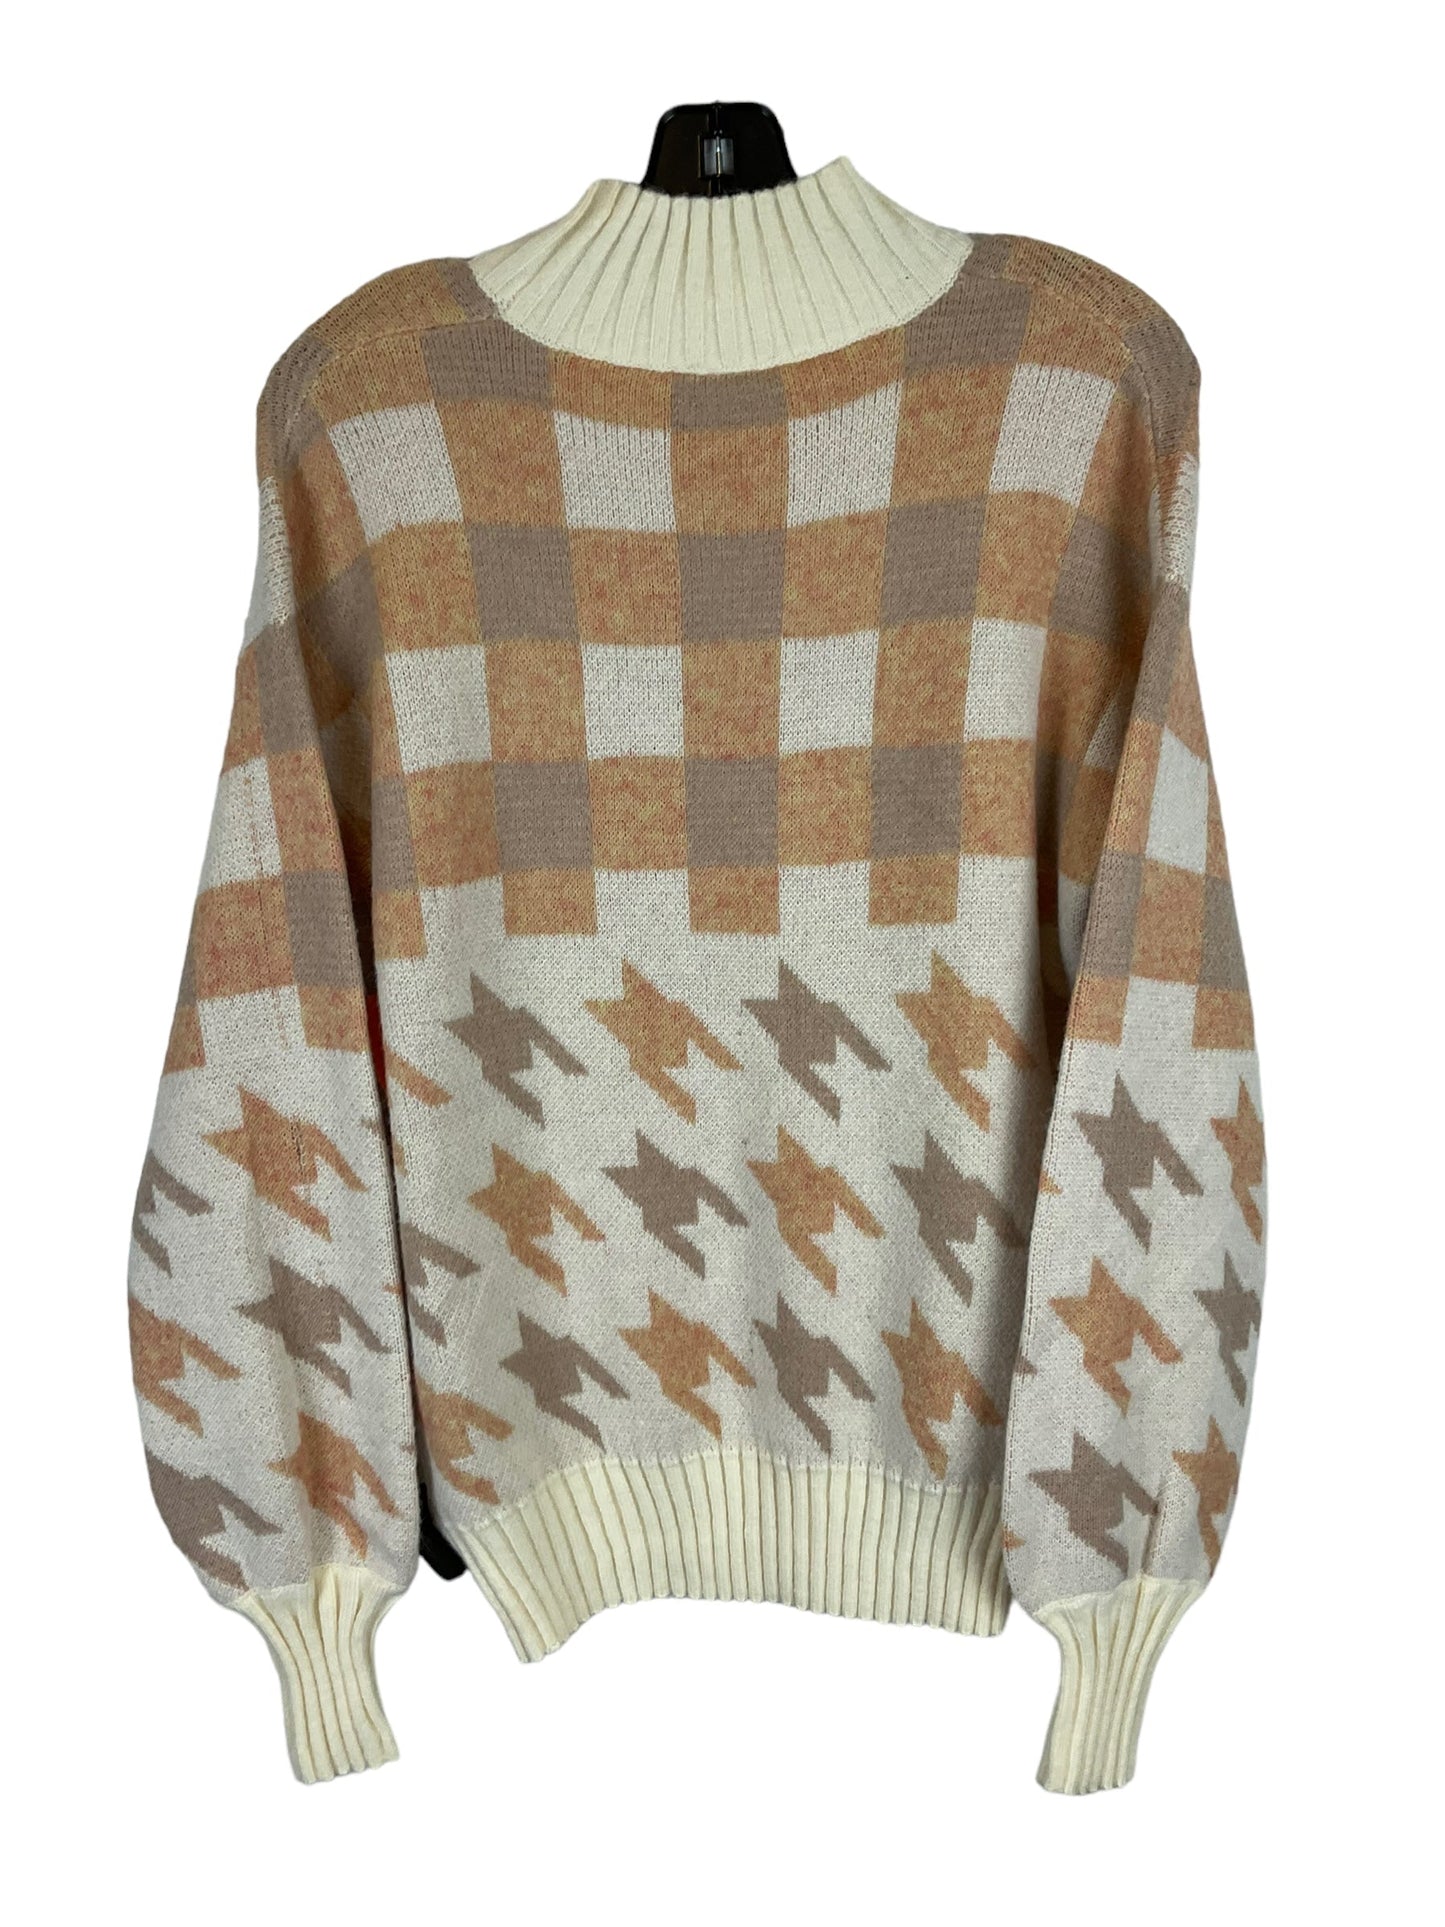 Sweater By Hem & Thread  Size: S